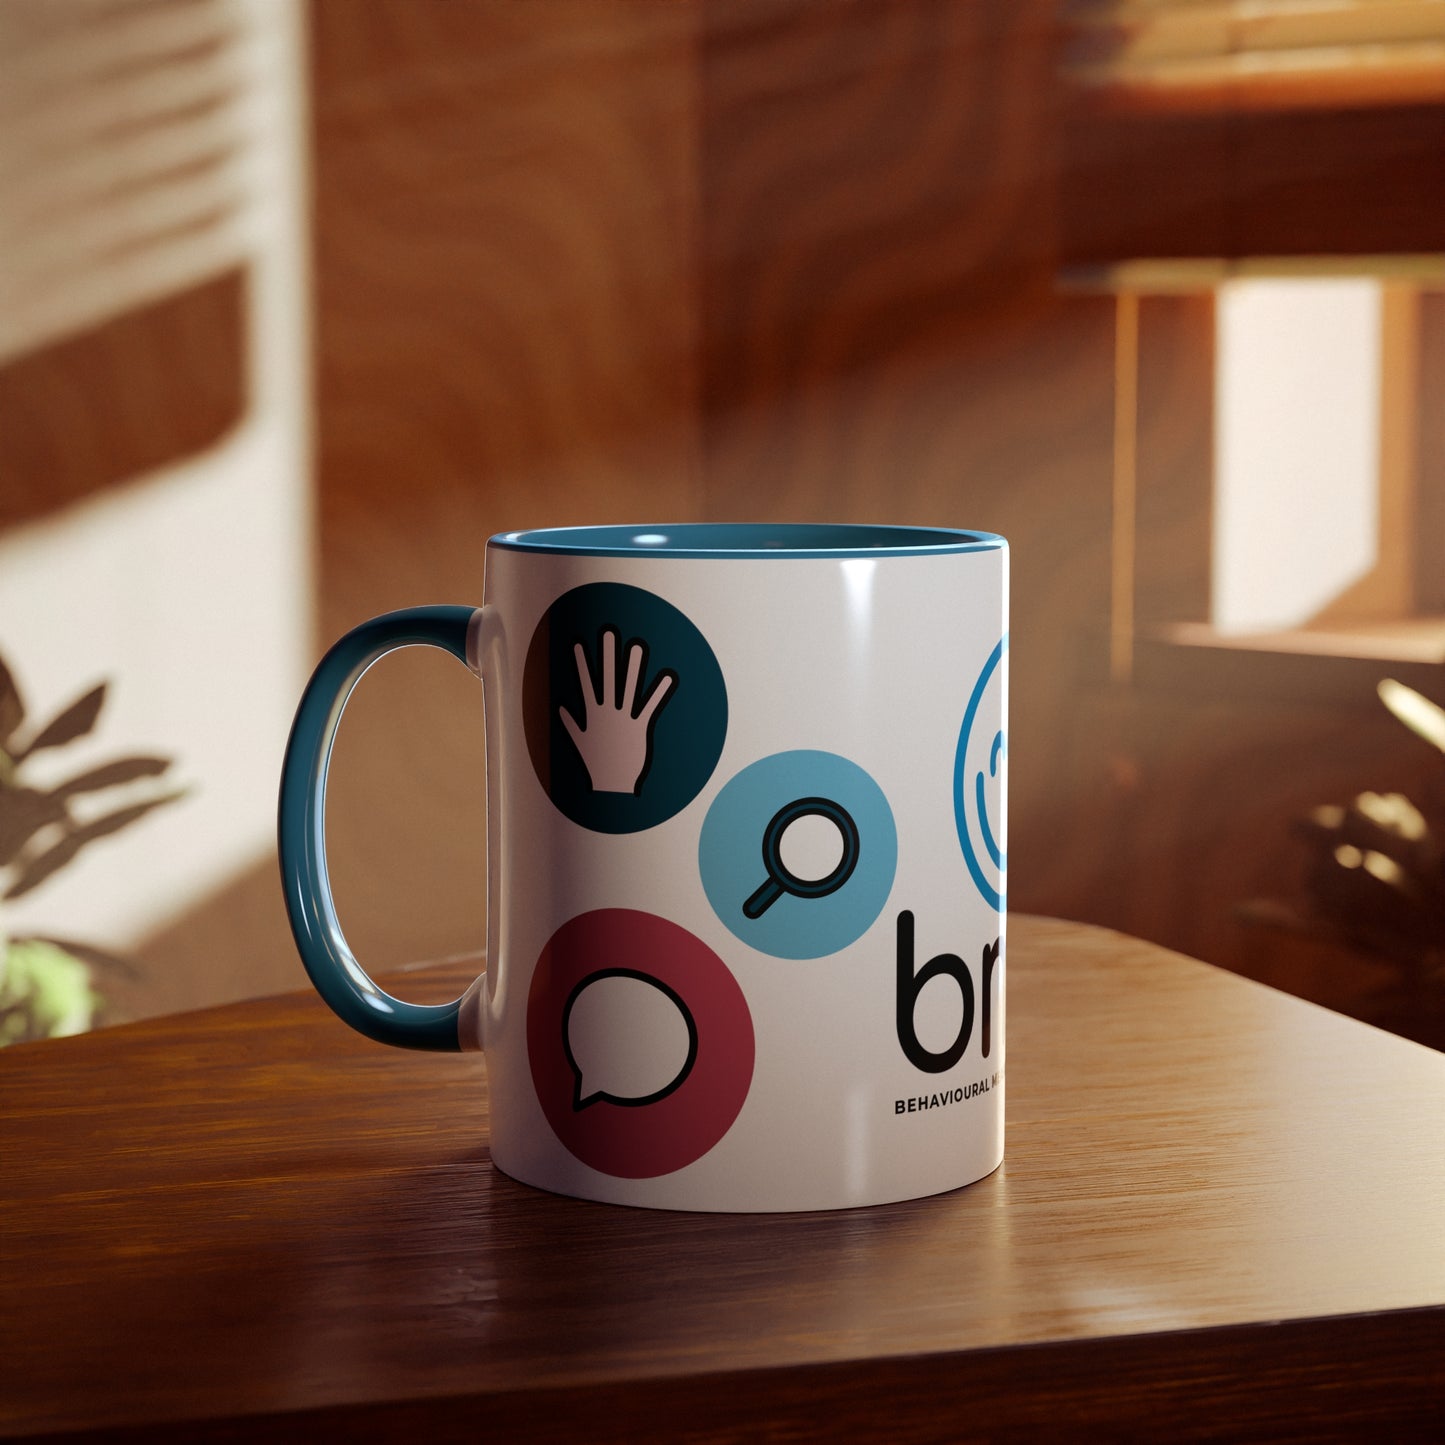 Coffee Mug (6 Behaviours)